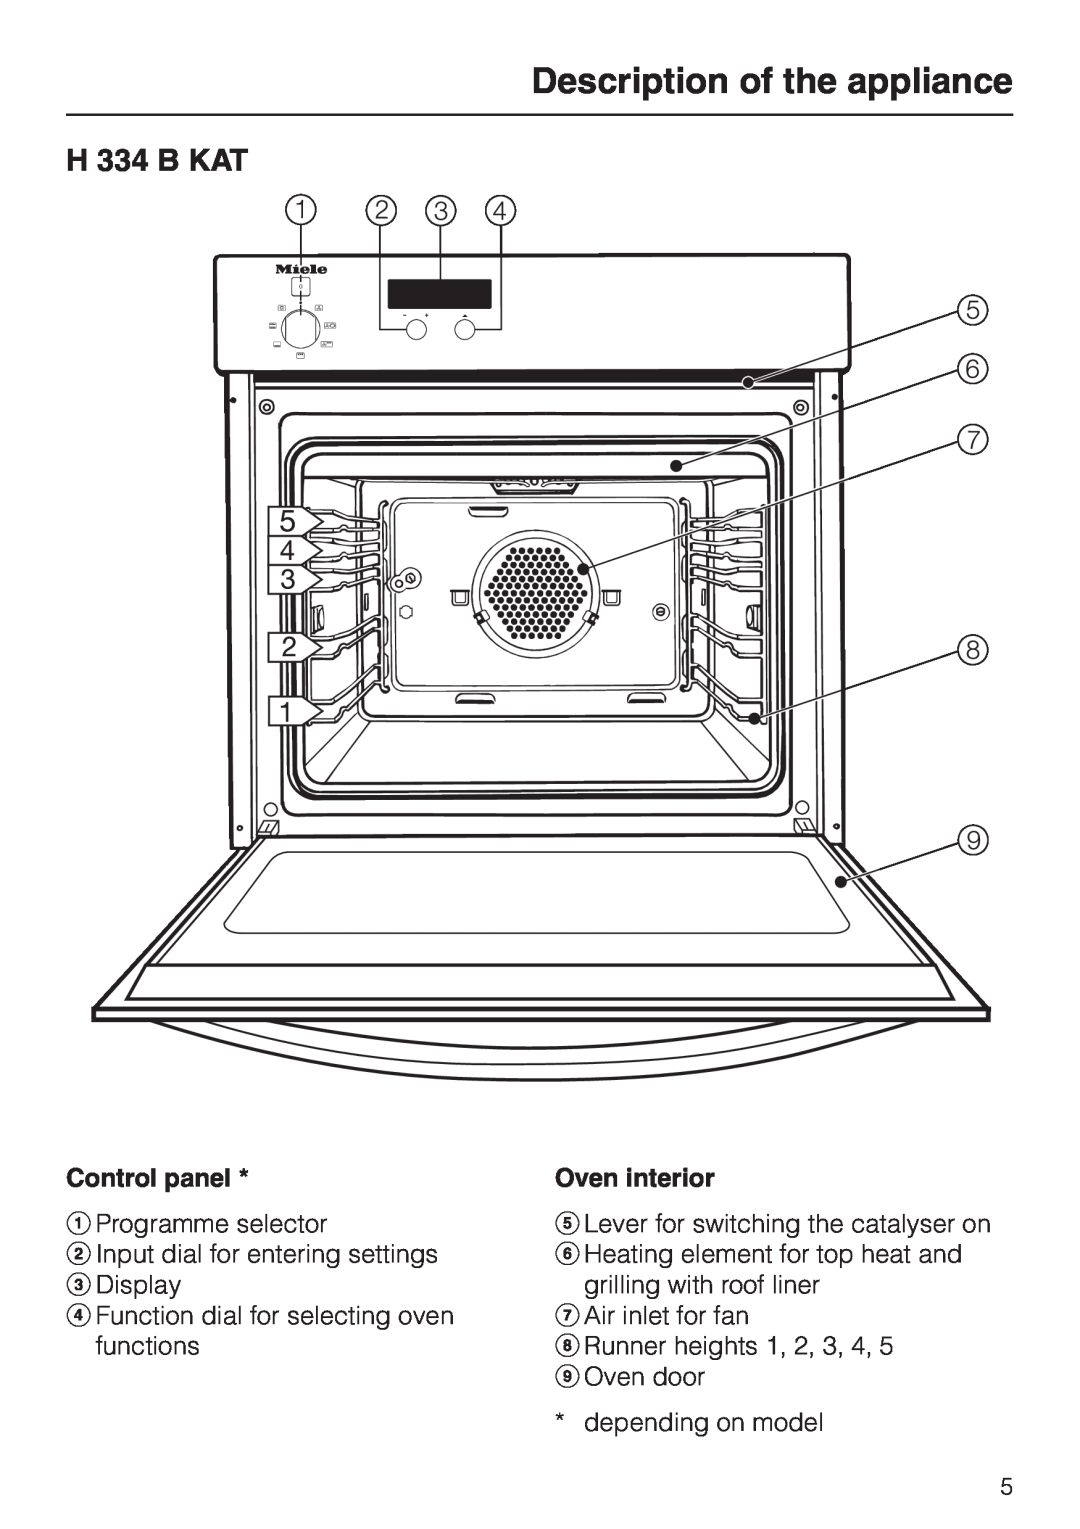 Miele H334B, H 344-2 B manual H 334 B KAT, Description of the appliance, Control panel, Oven interior 